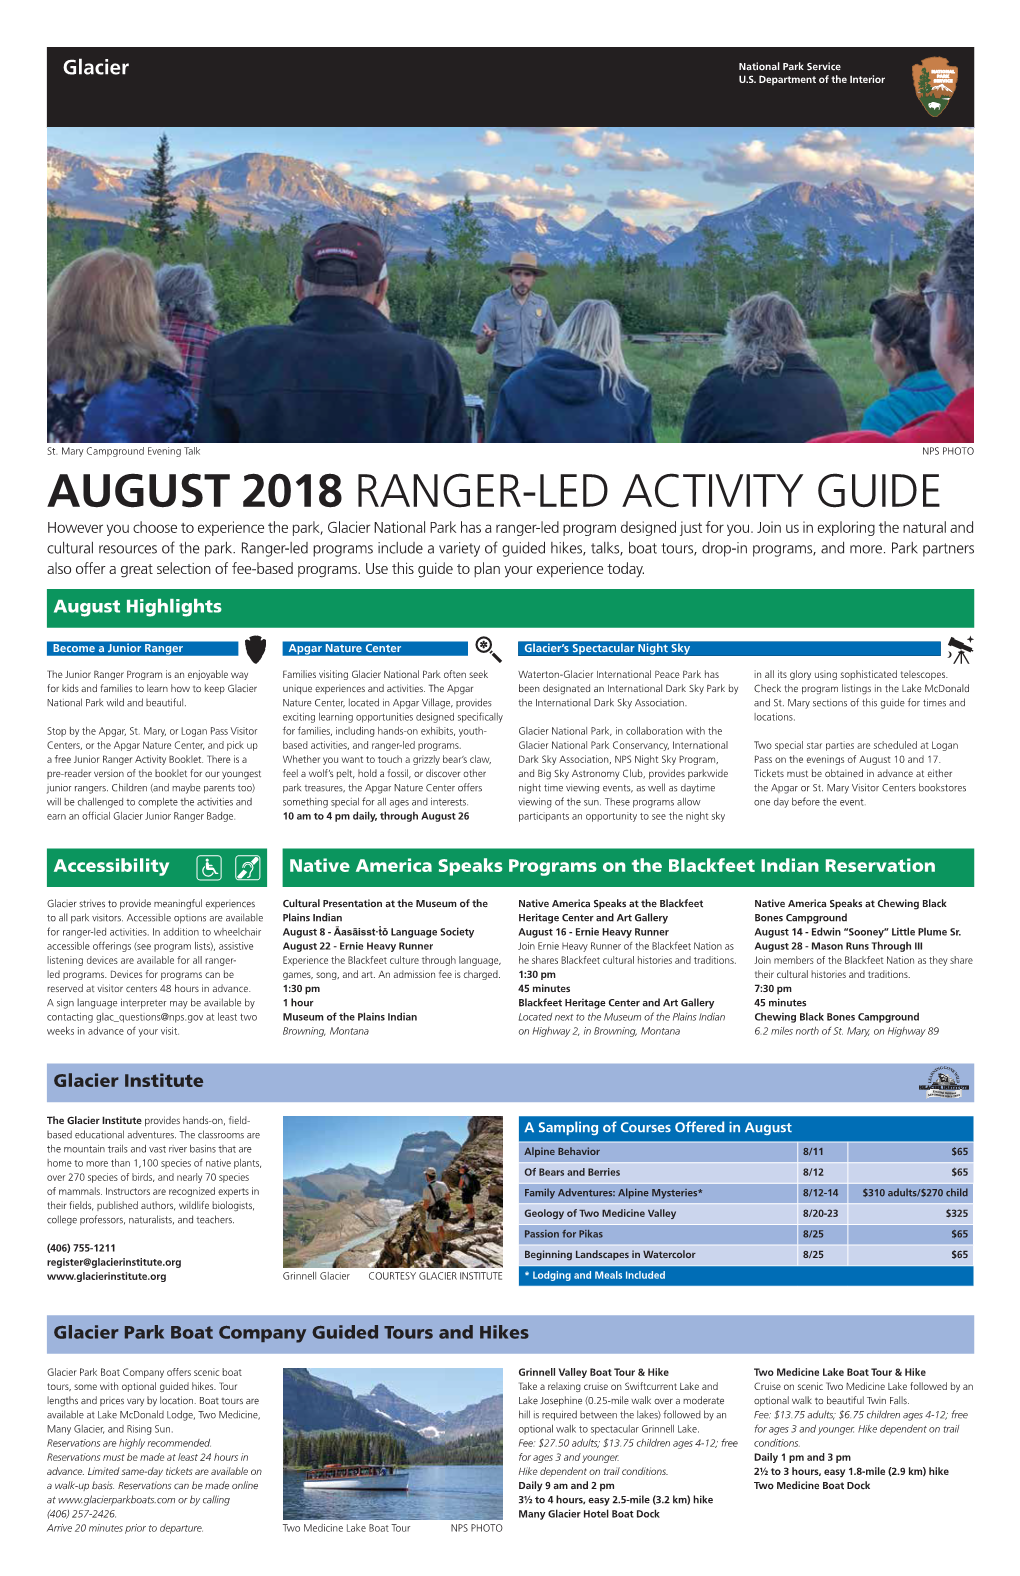 August 2018 Ranger-Led Activity Schedule